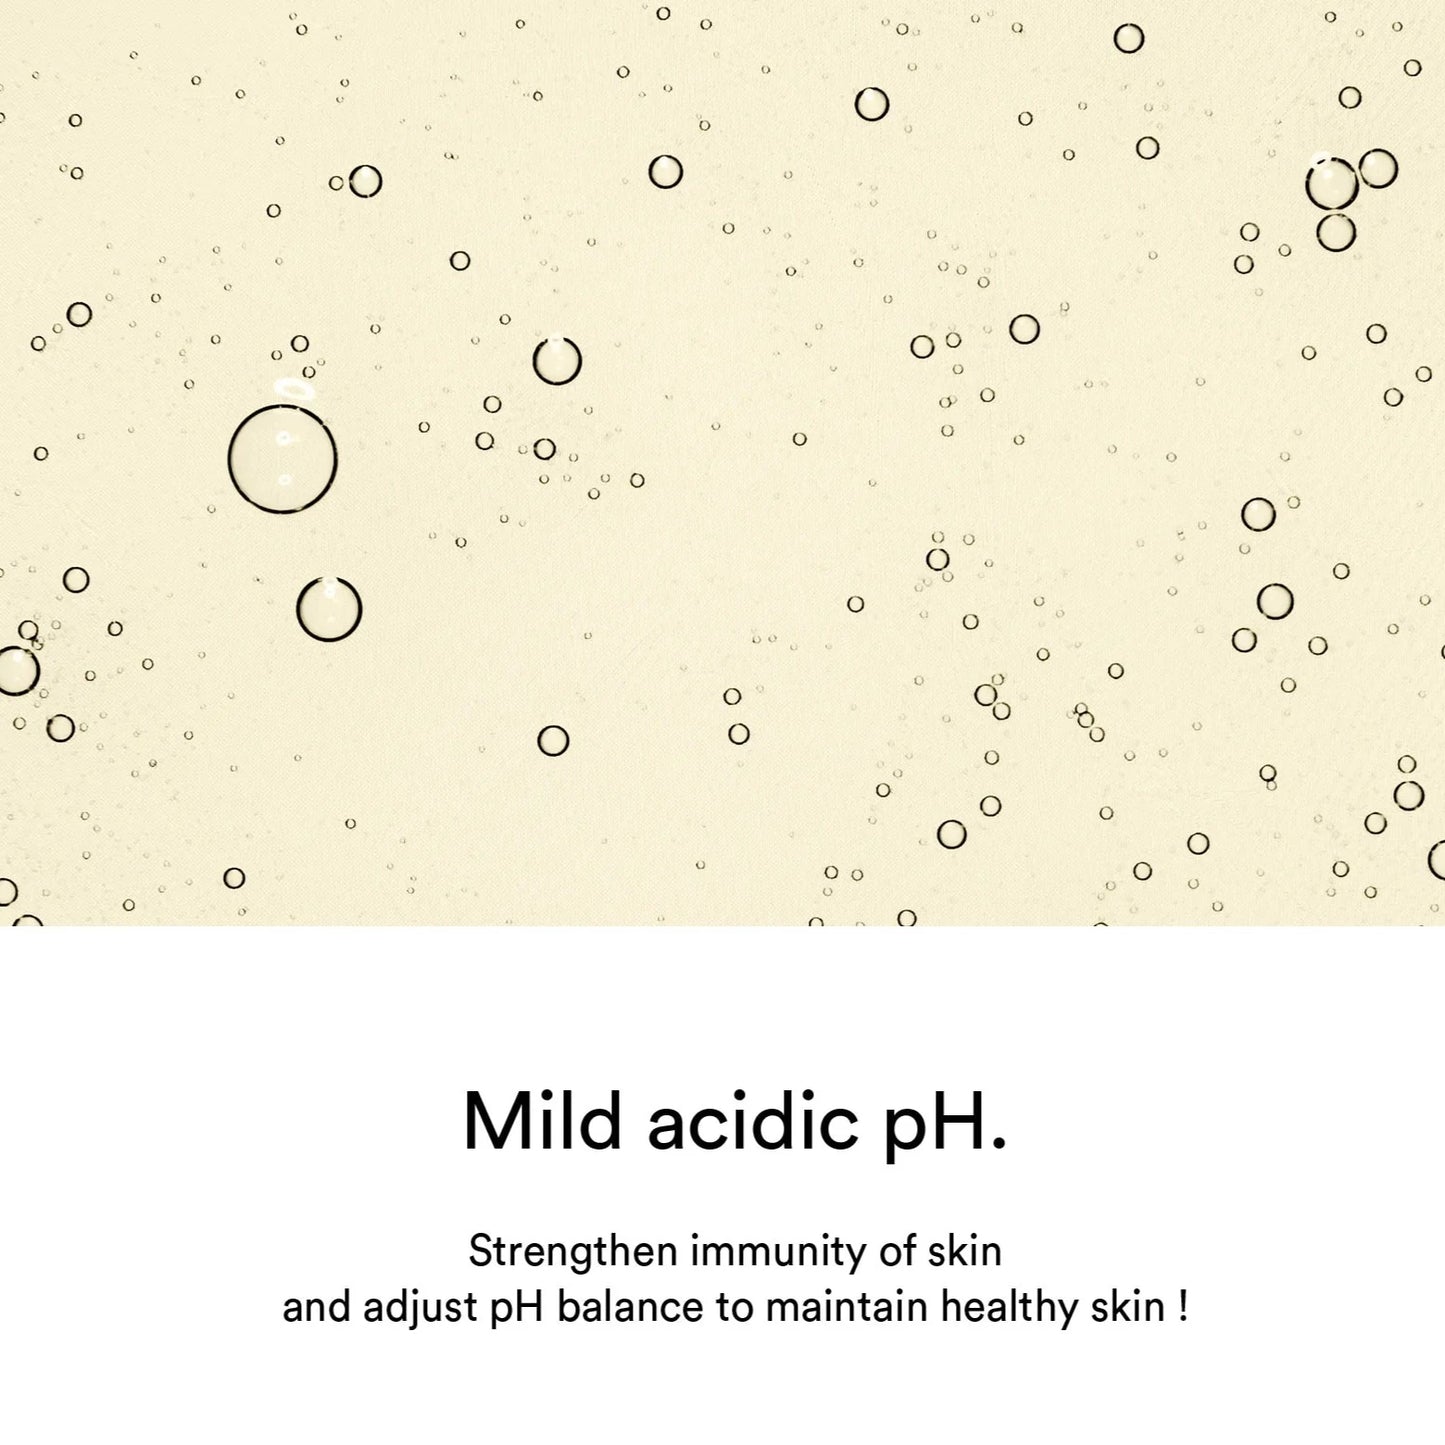 ABIB Mild Acidic pH Sheet Mask Yuja Fit - 1 sheet